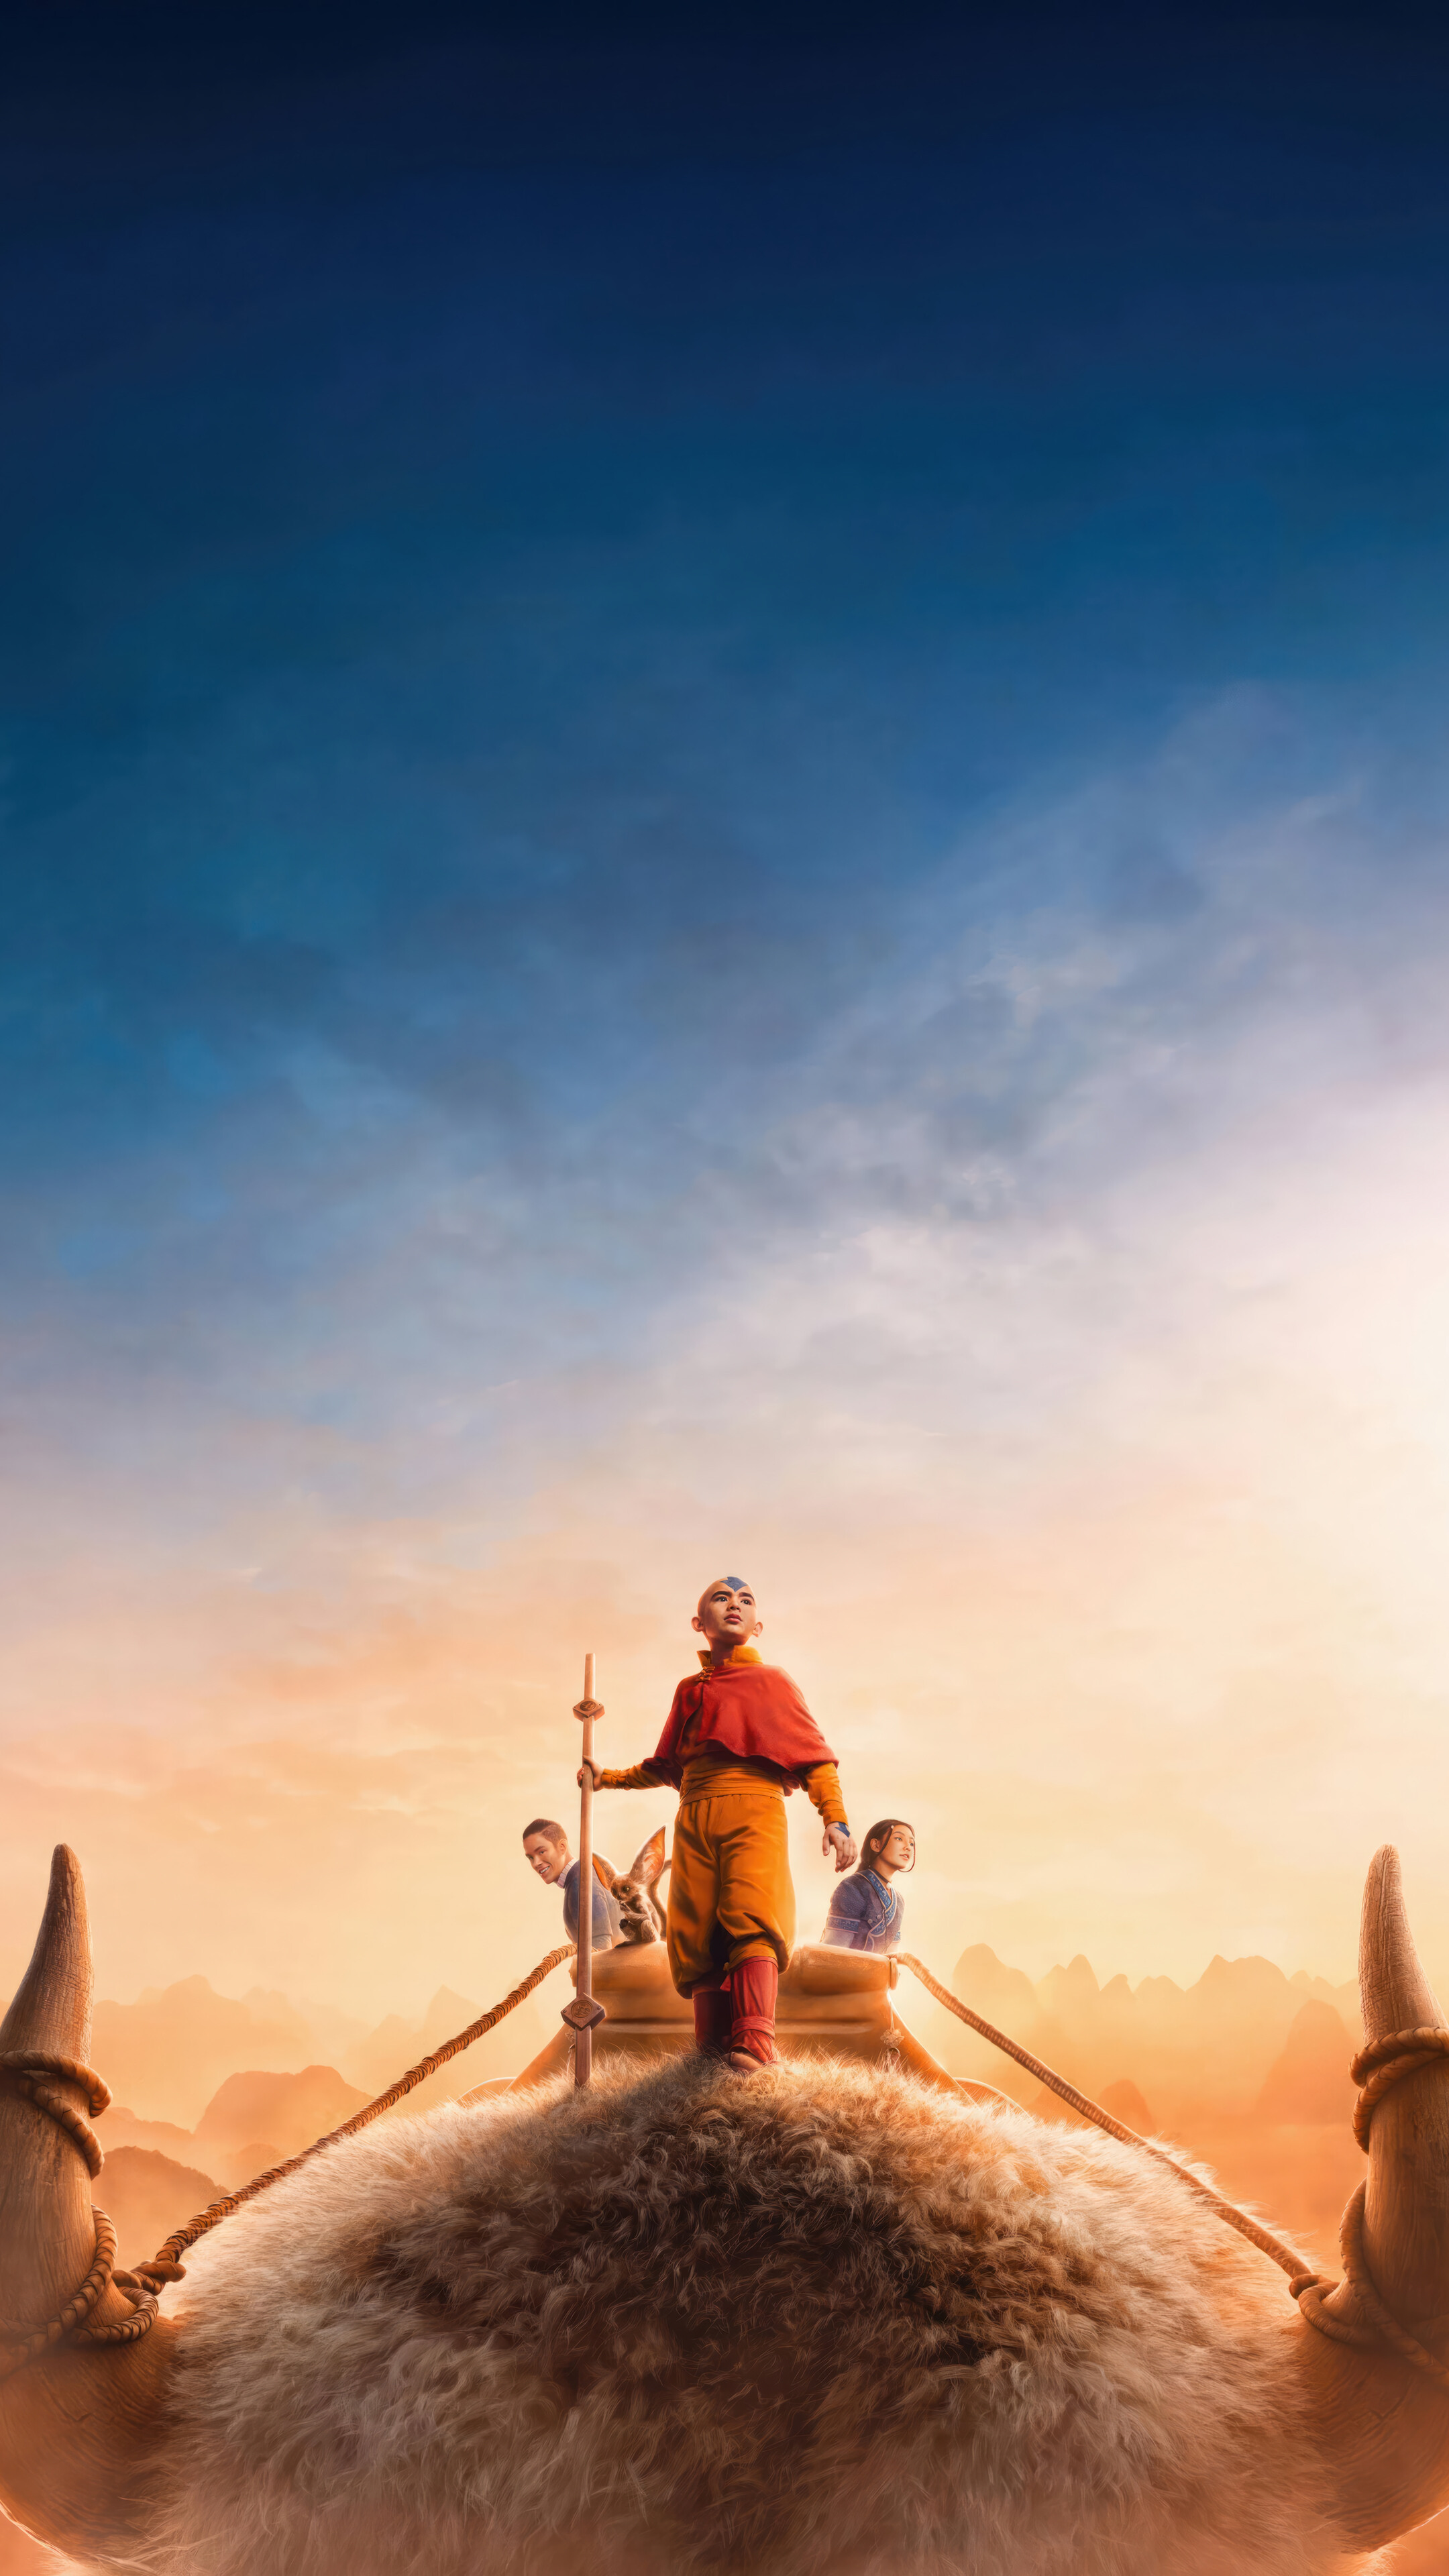 Avatar The Last Airbender Character Poster 4k Wallpaper